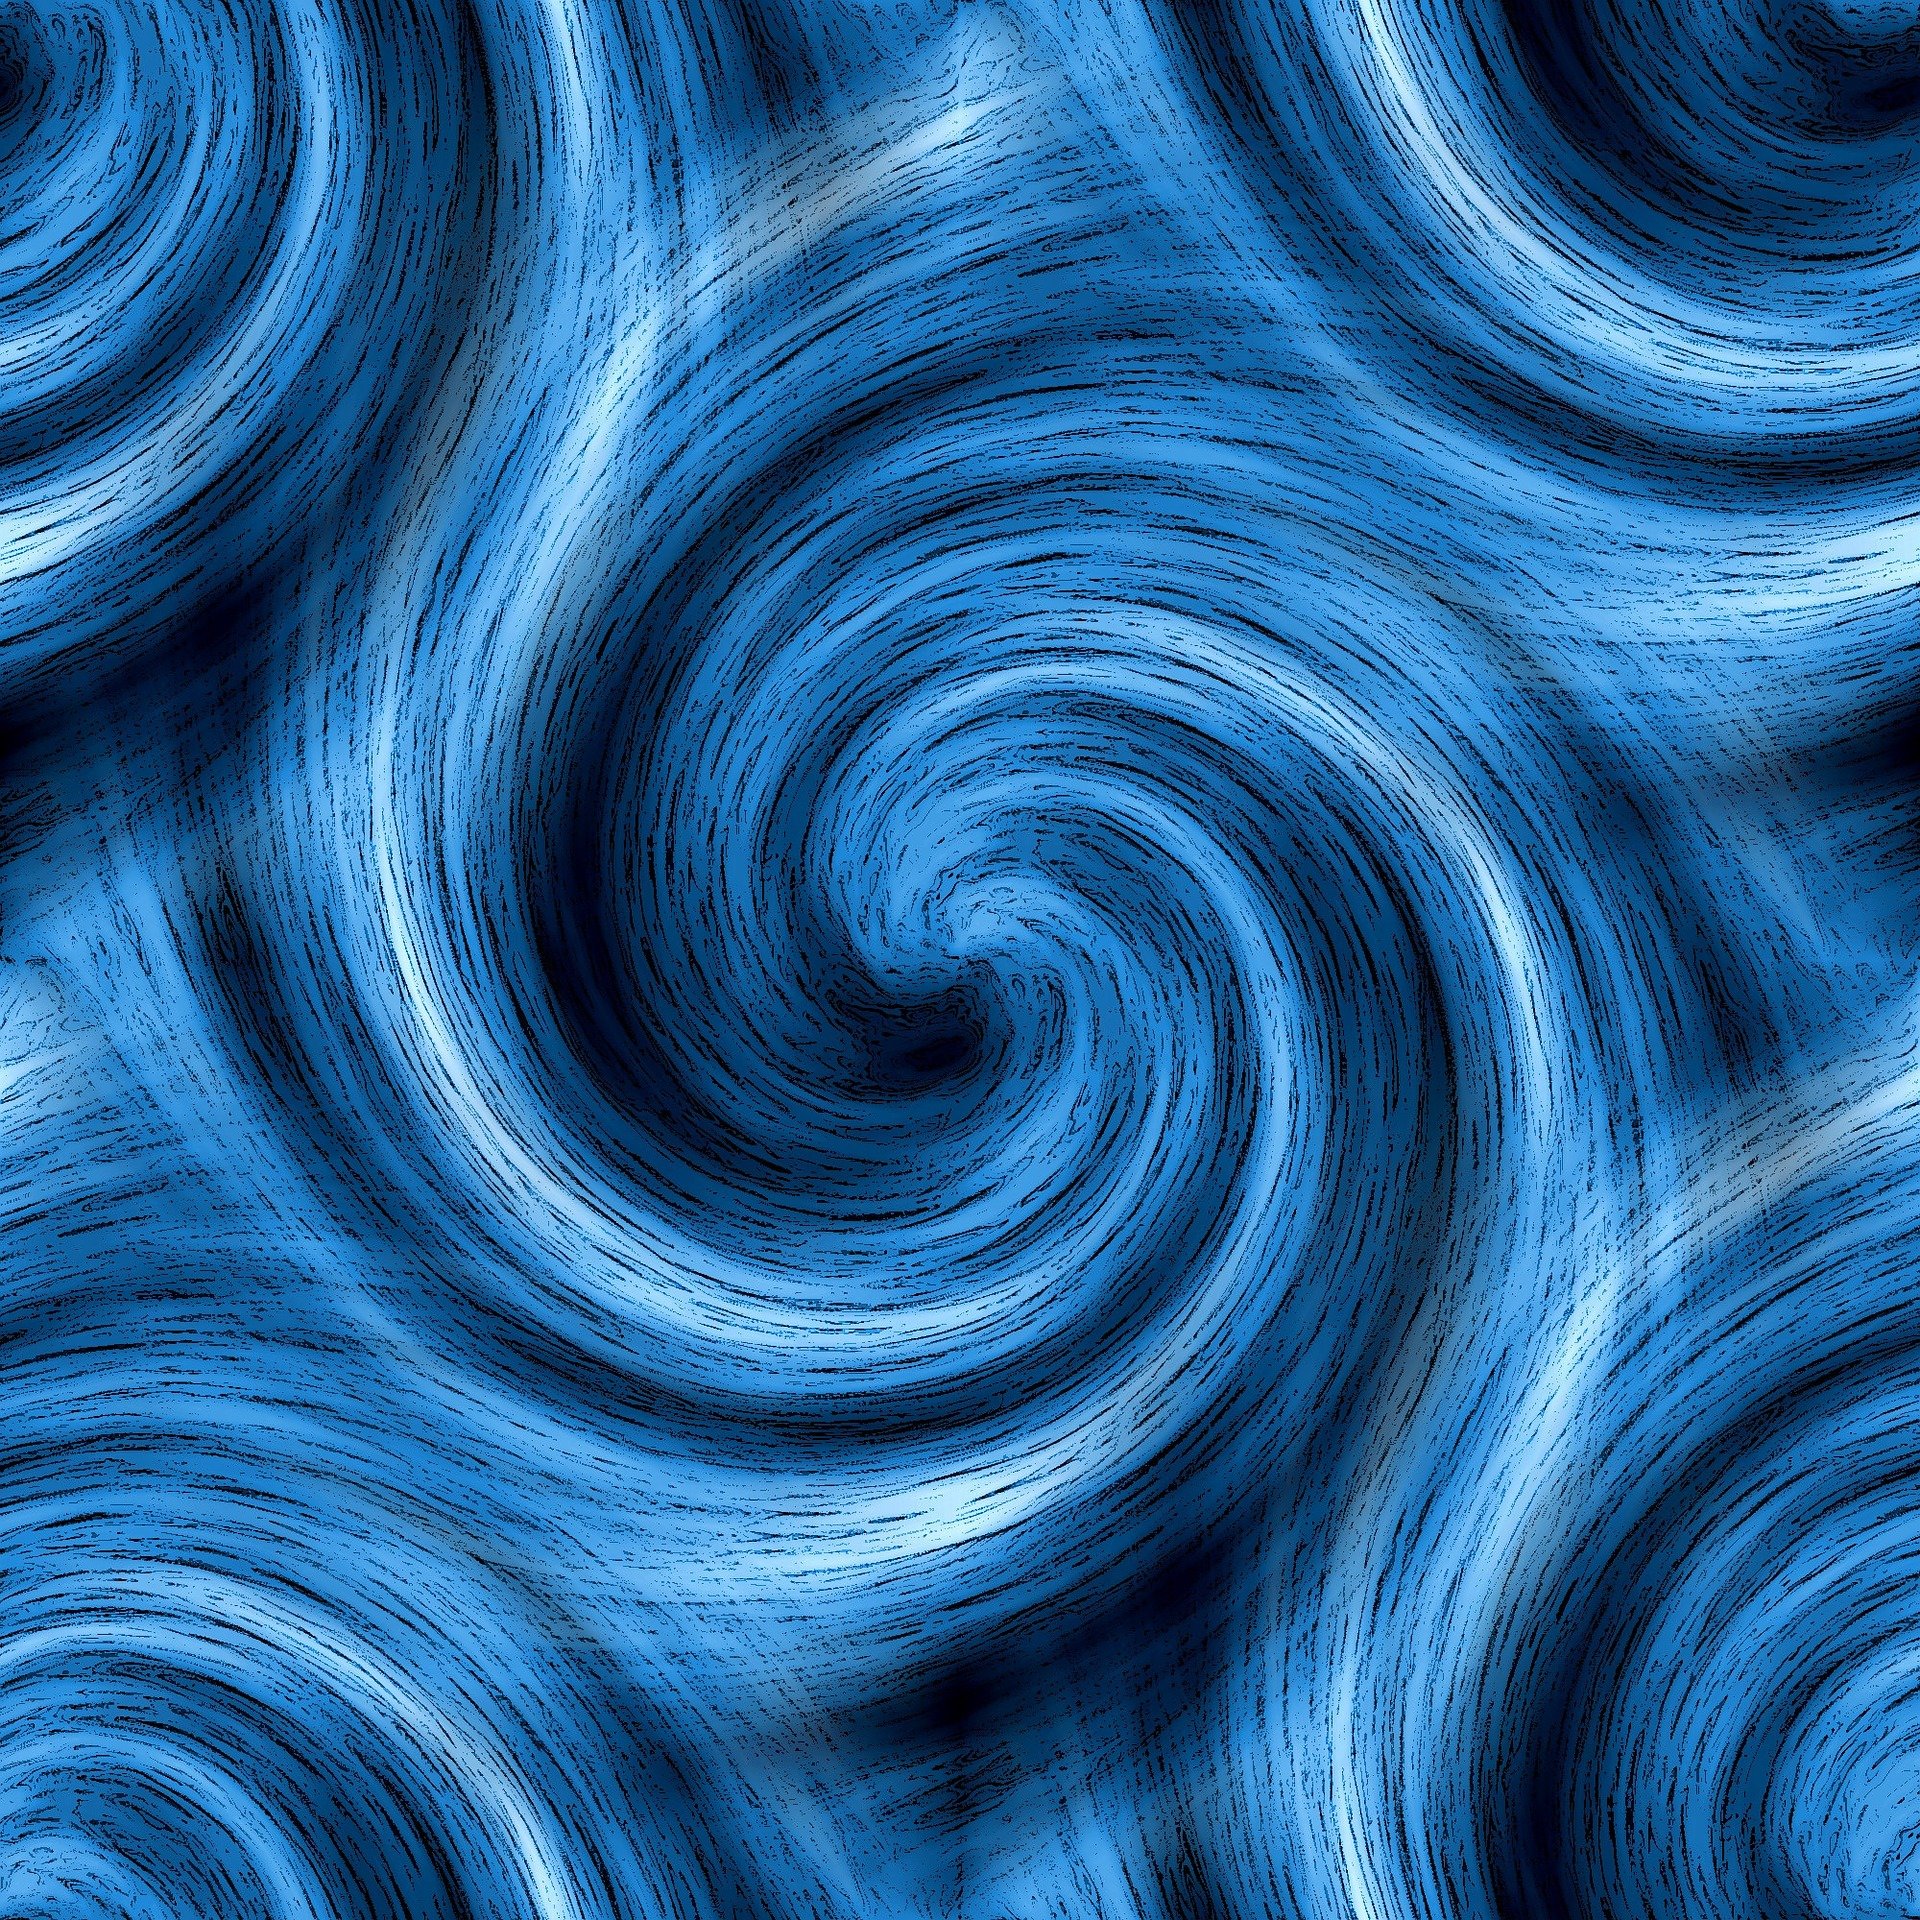 Fluid Dynamics, Rotation and Surviving Dangerous Whirlpools